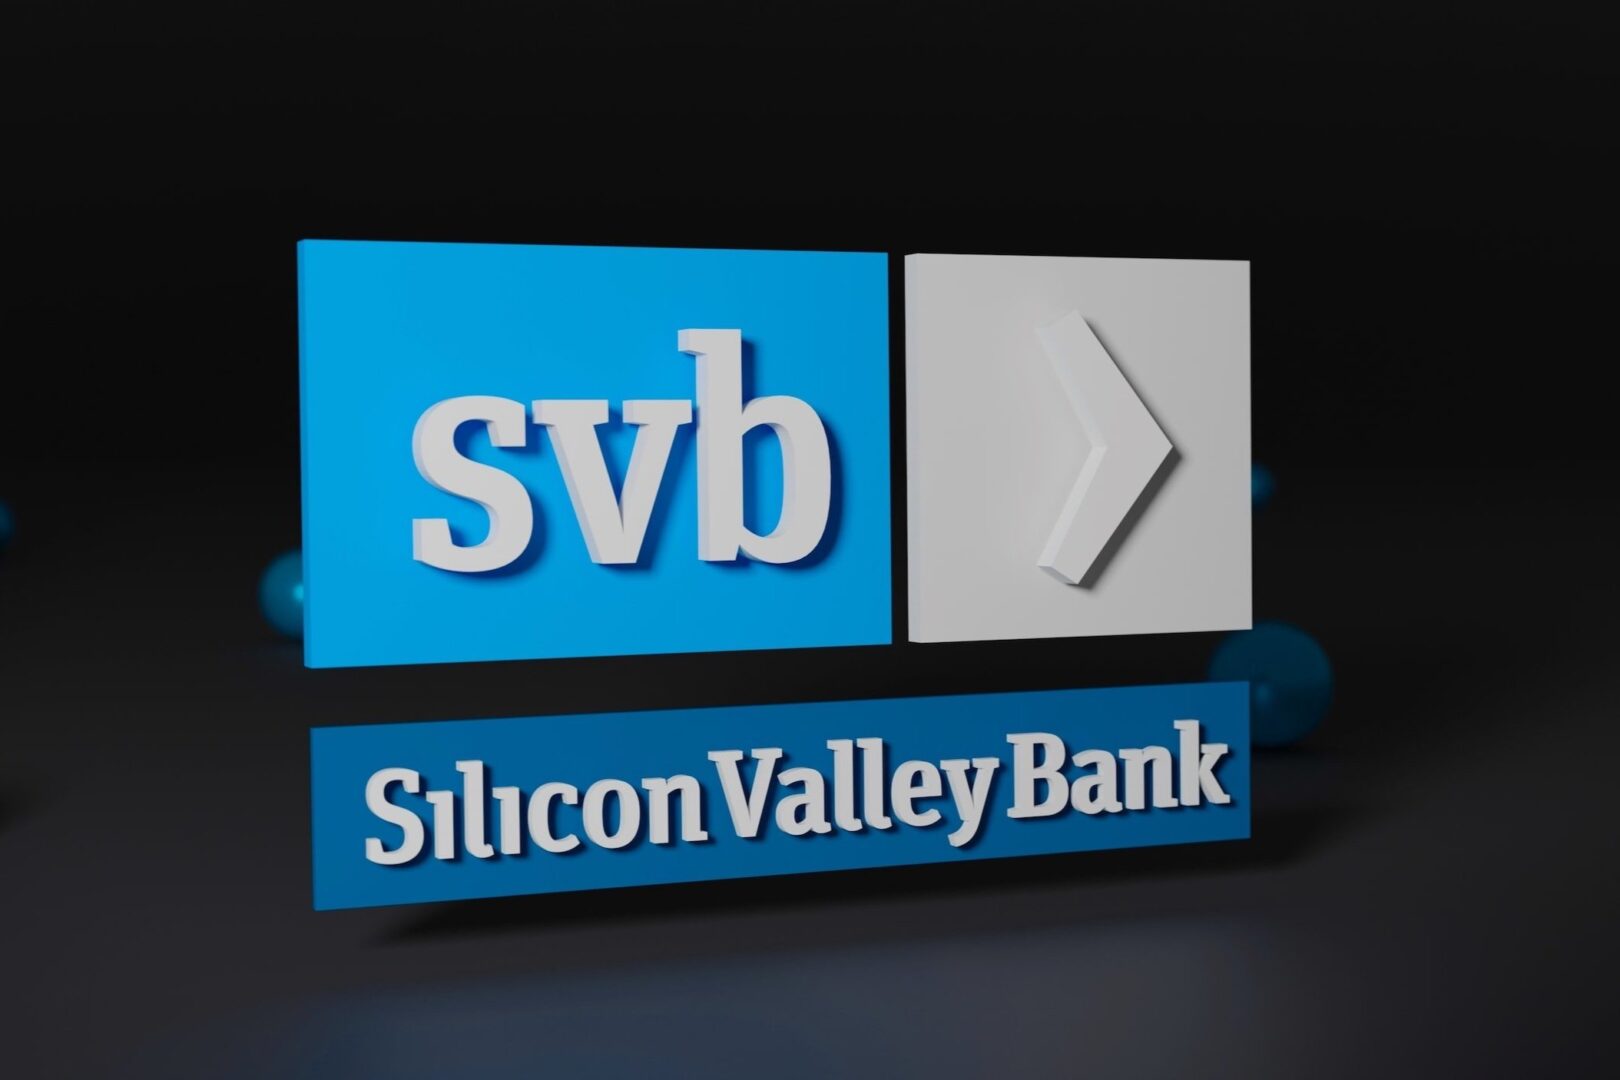 The logo for silicon valley bank.